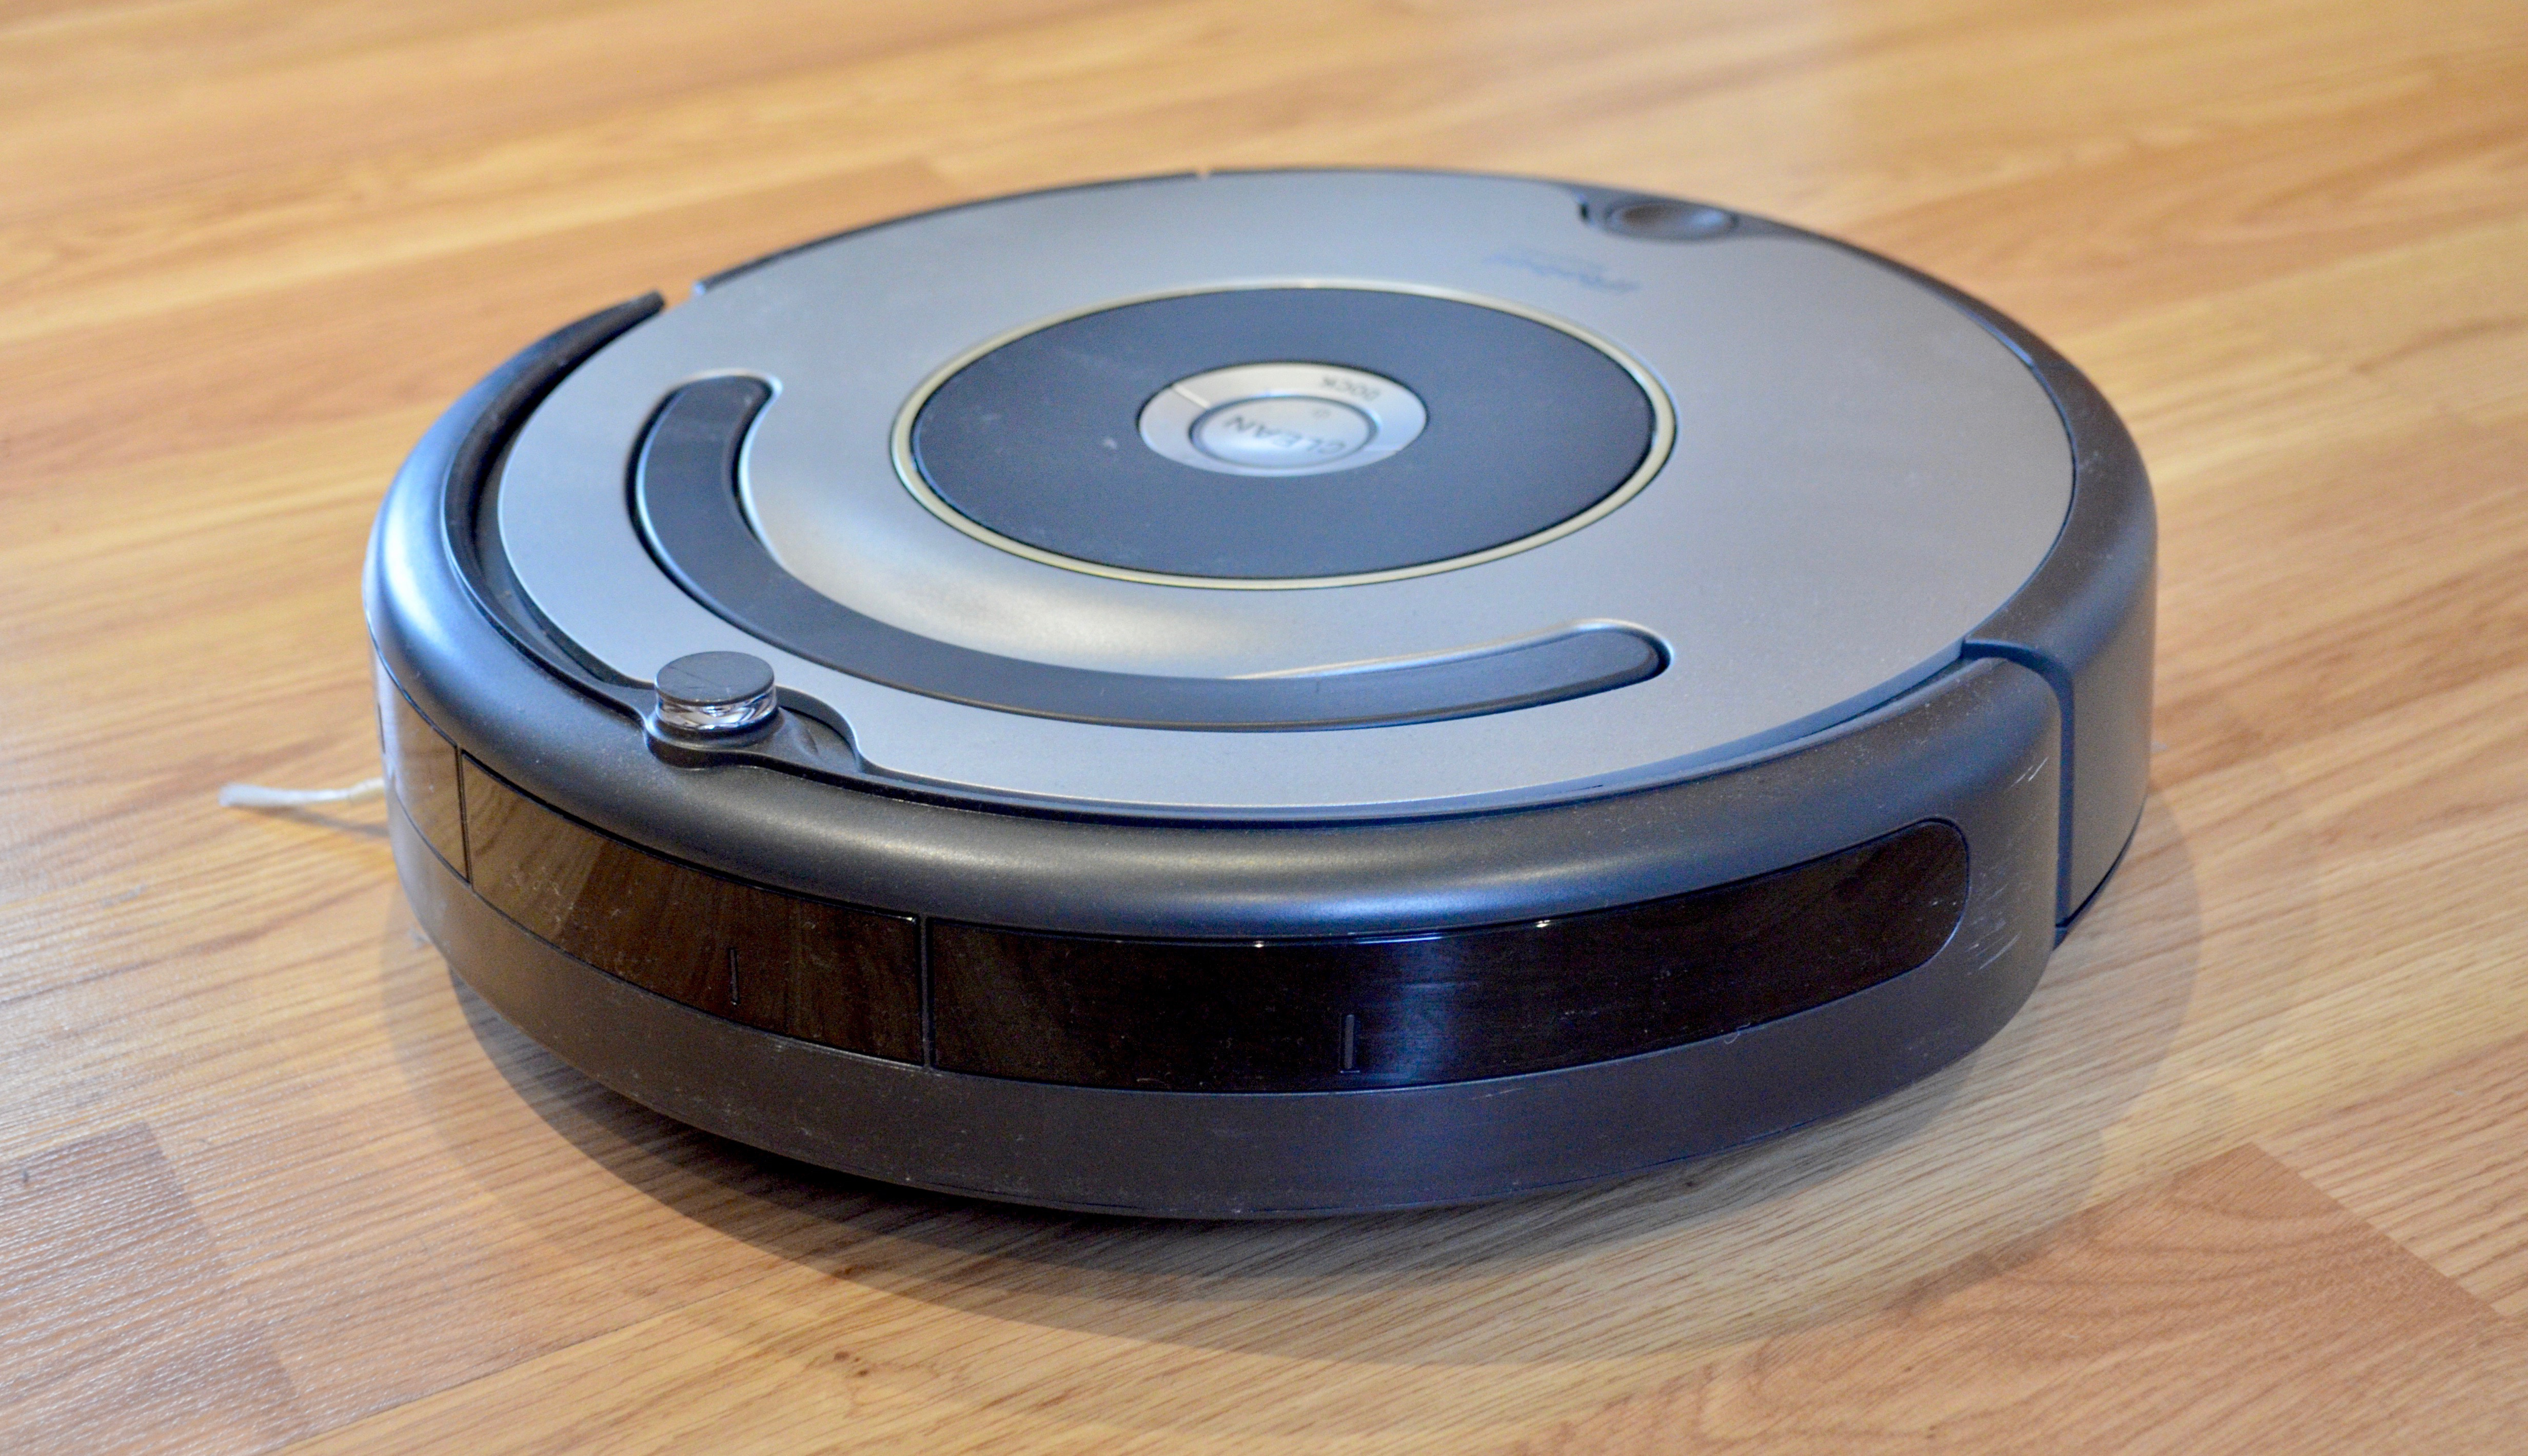 platform Landscape Tactile sense iRobot Roomba 616 review: Robotic vacuuming on the cheap - Gearbrain